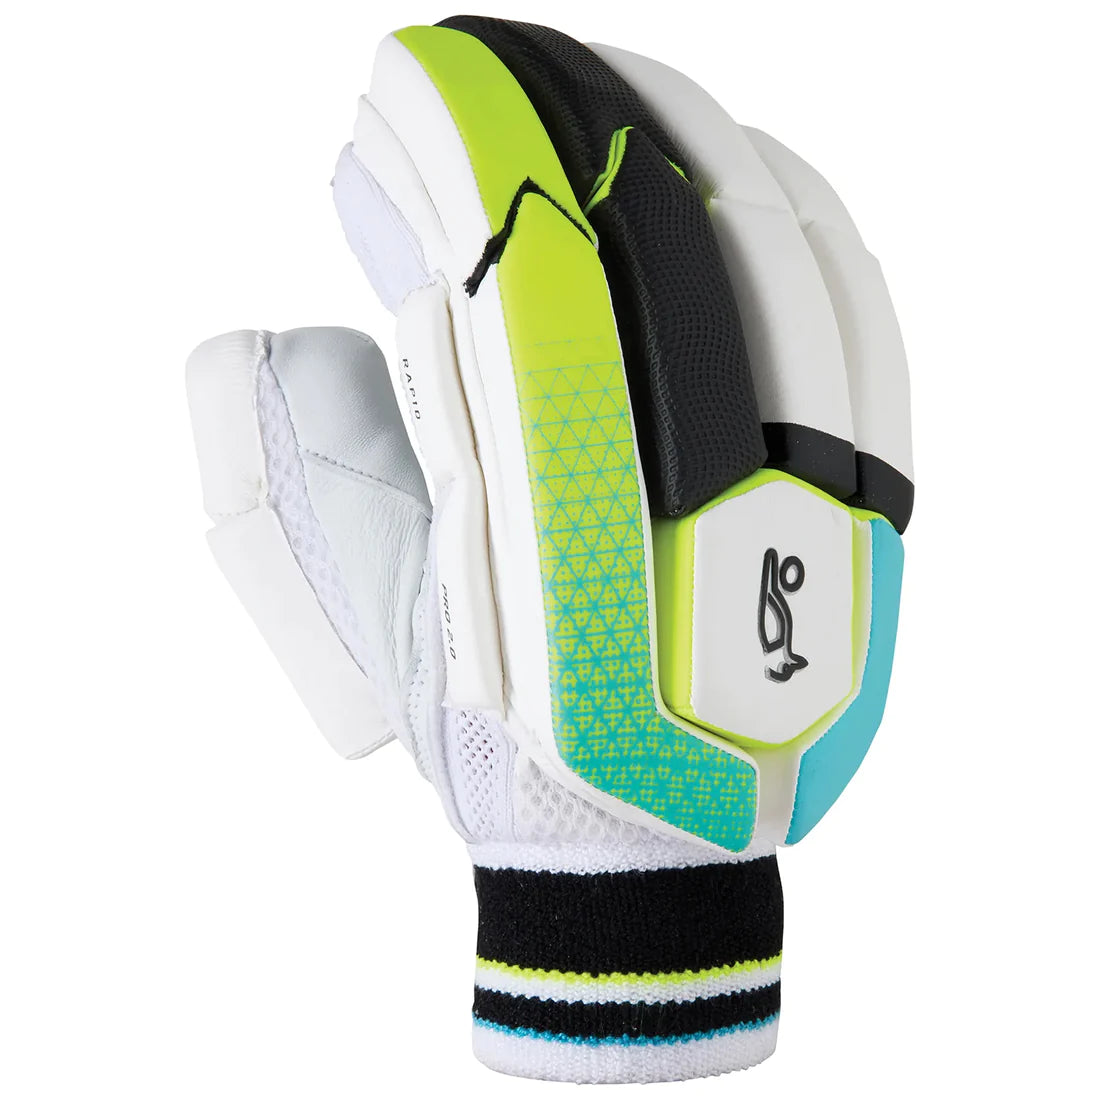 Kookaburra Rapid Pro 2.0 Batting Gloves